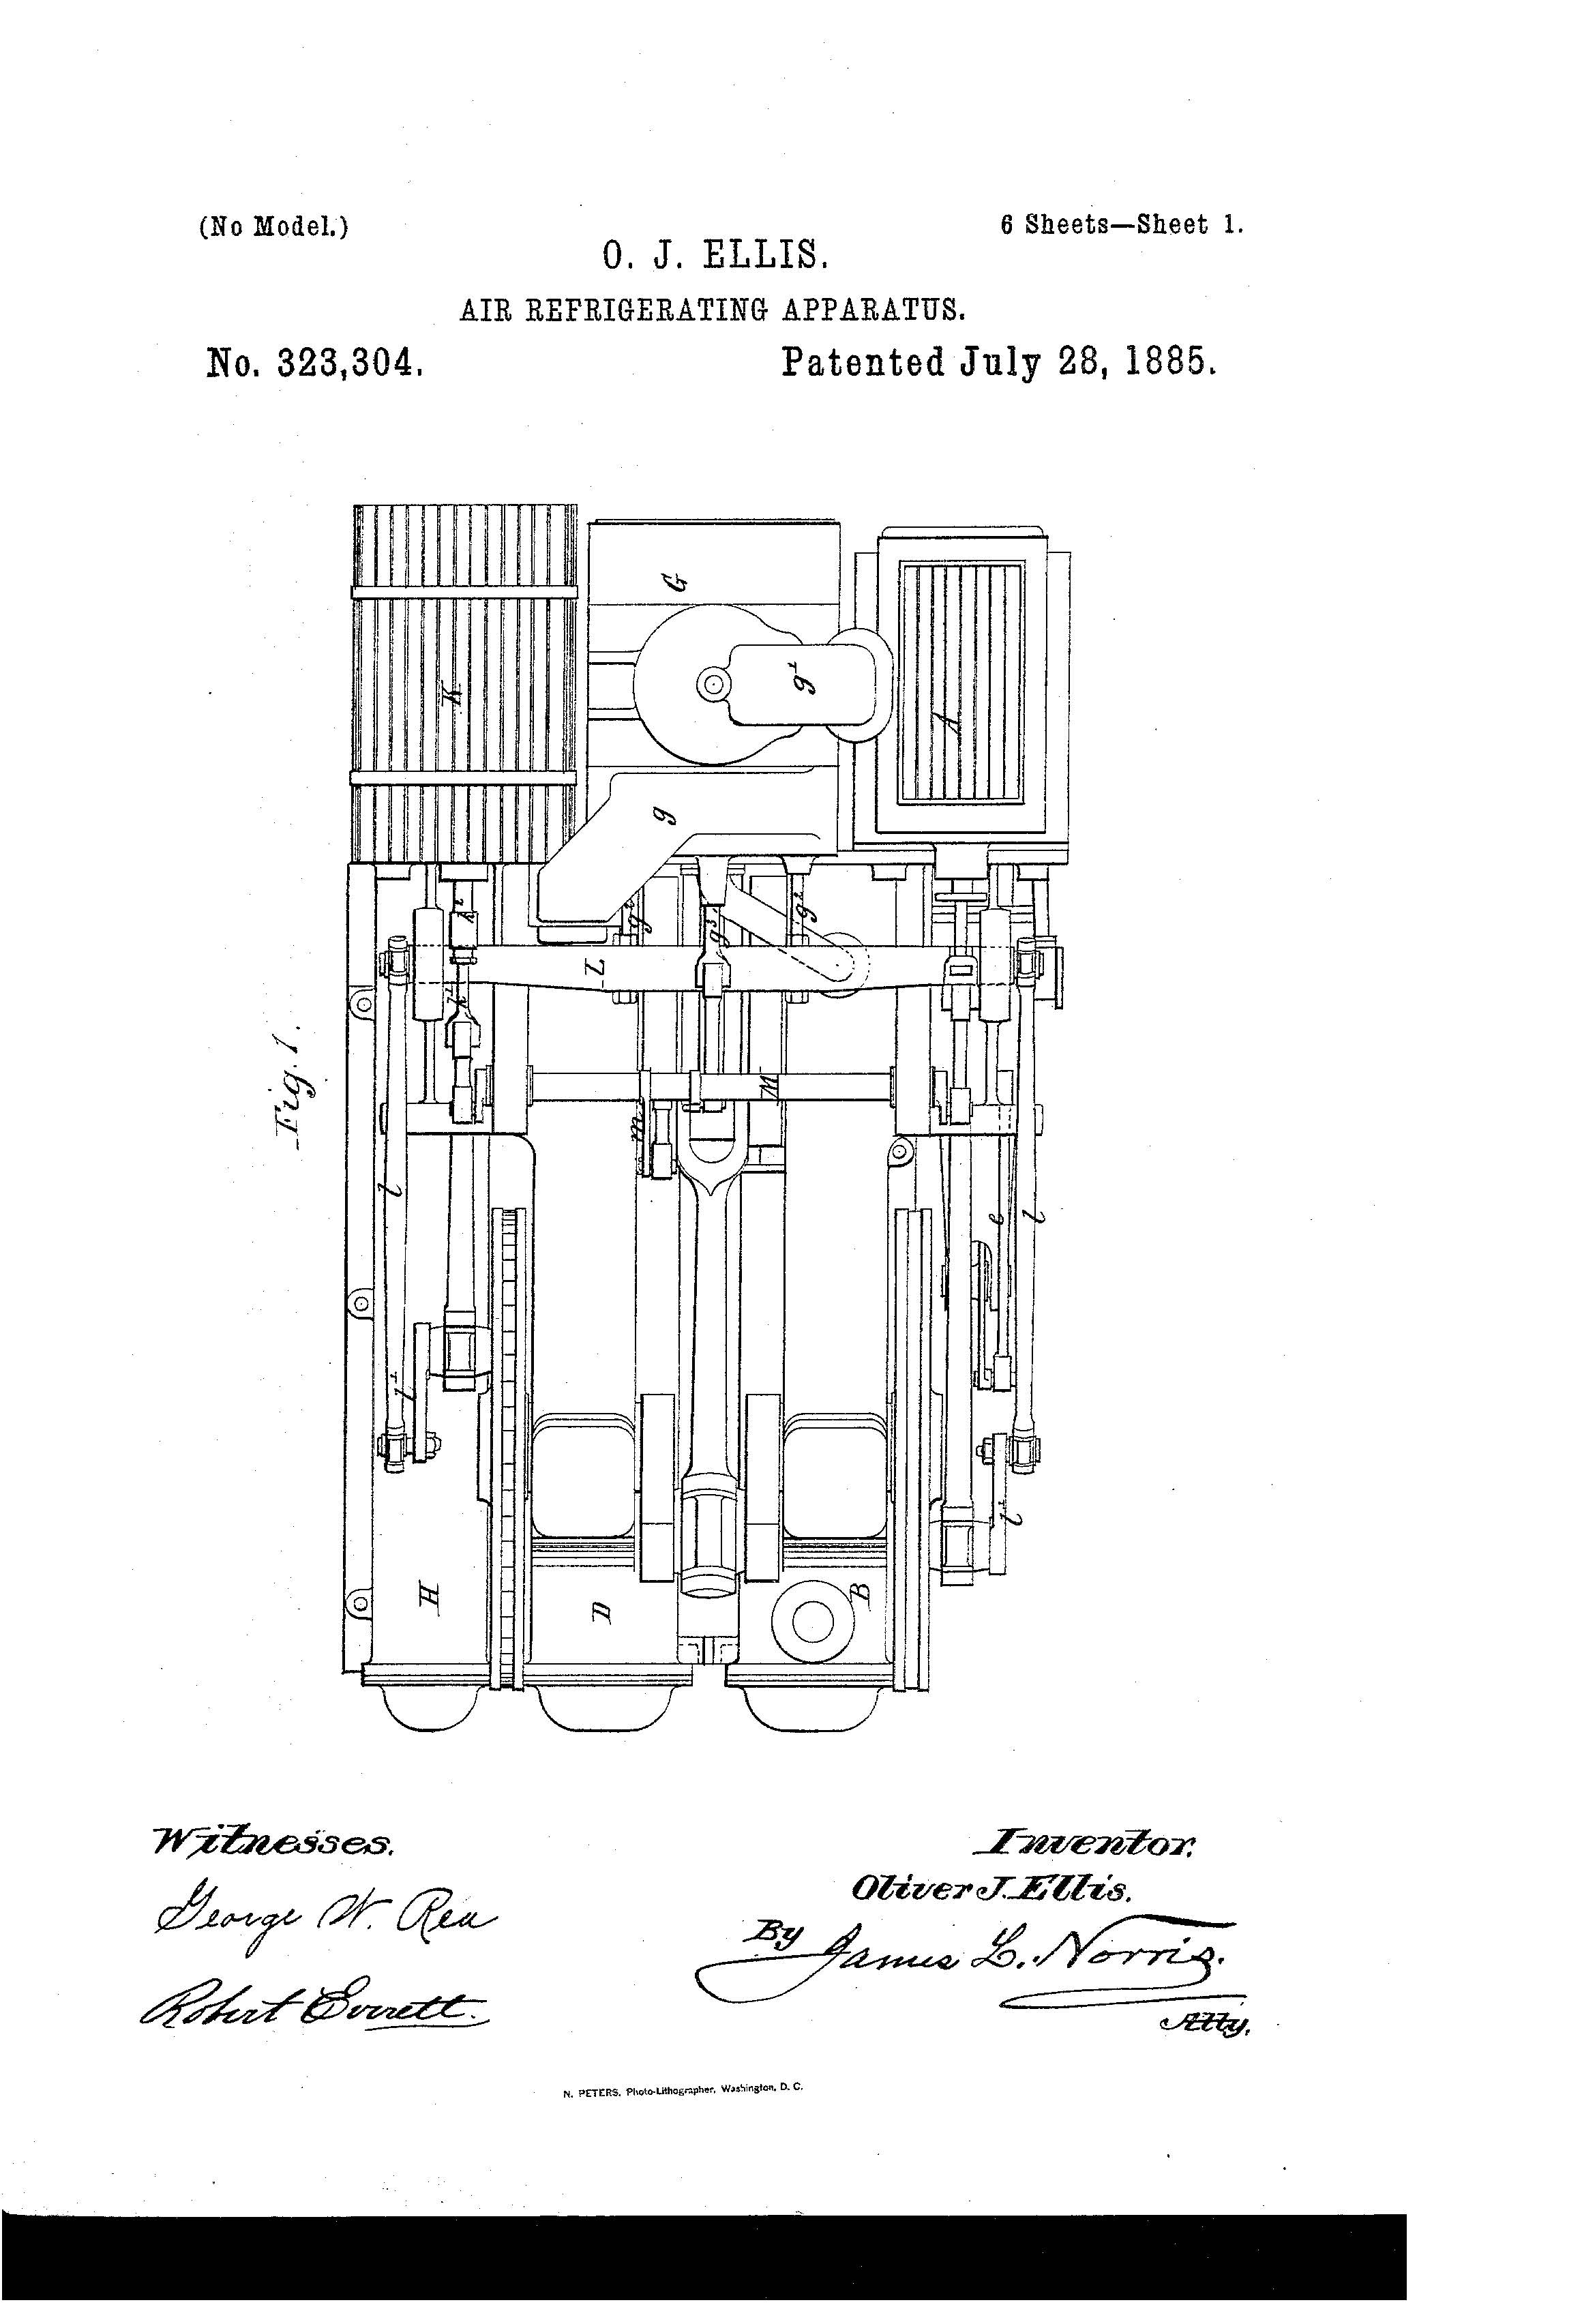 Air Refrigerating Apparatus Patent